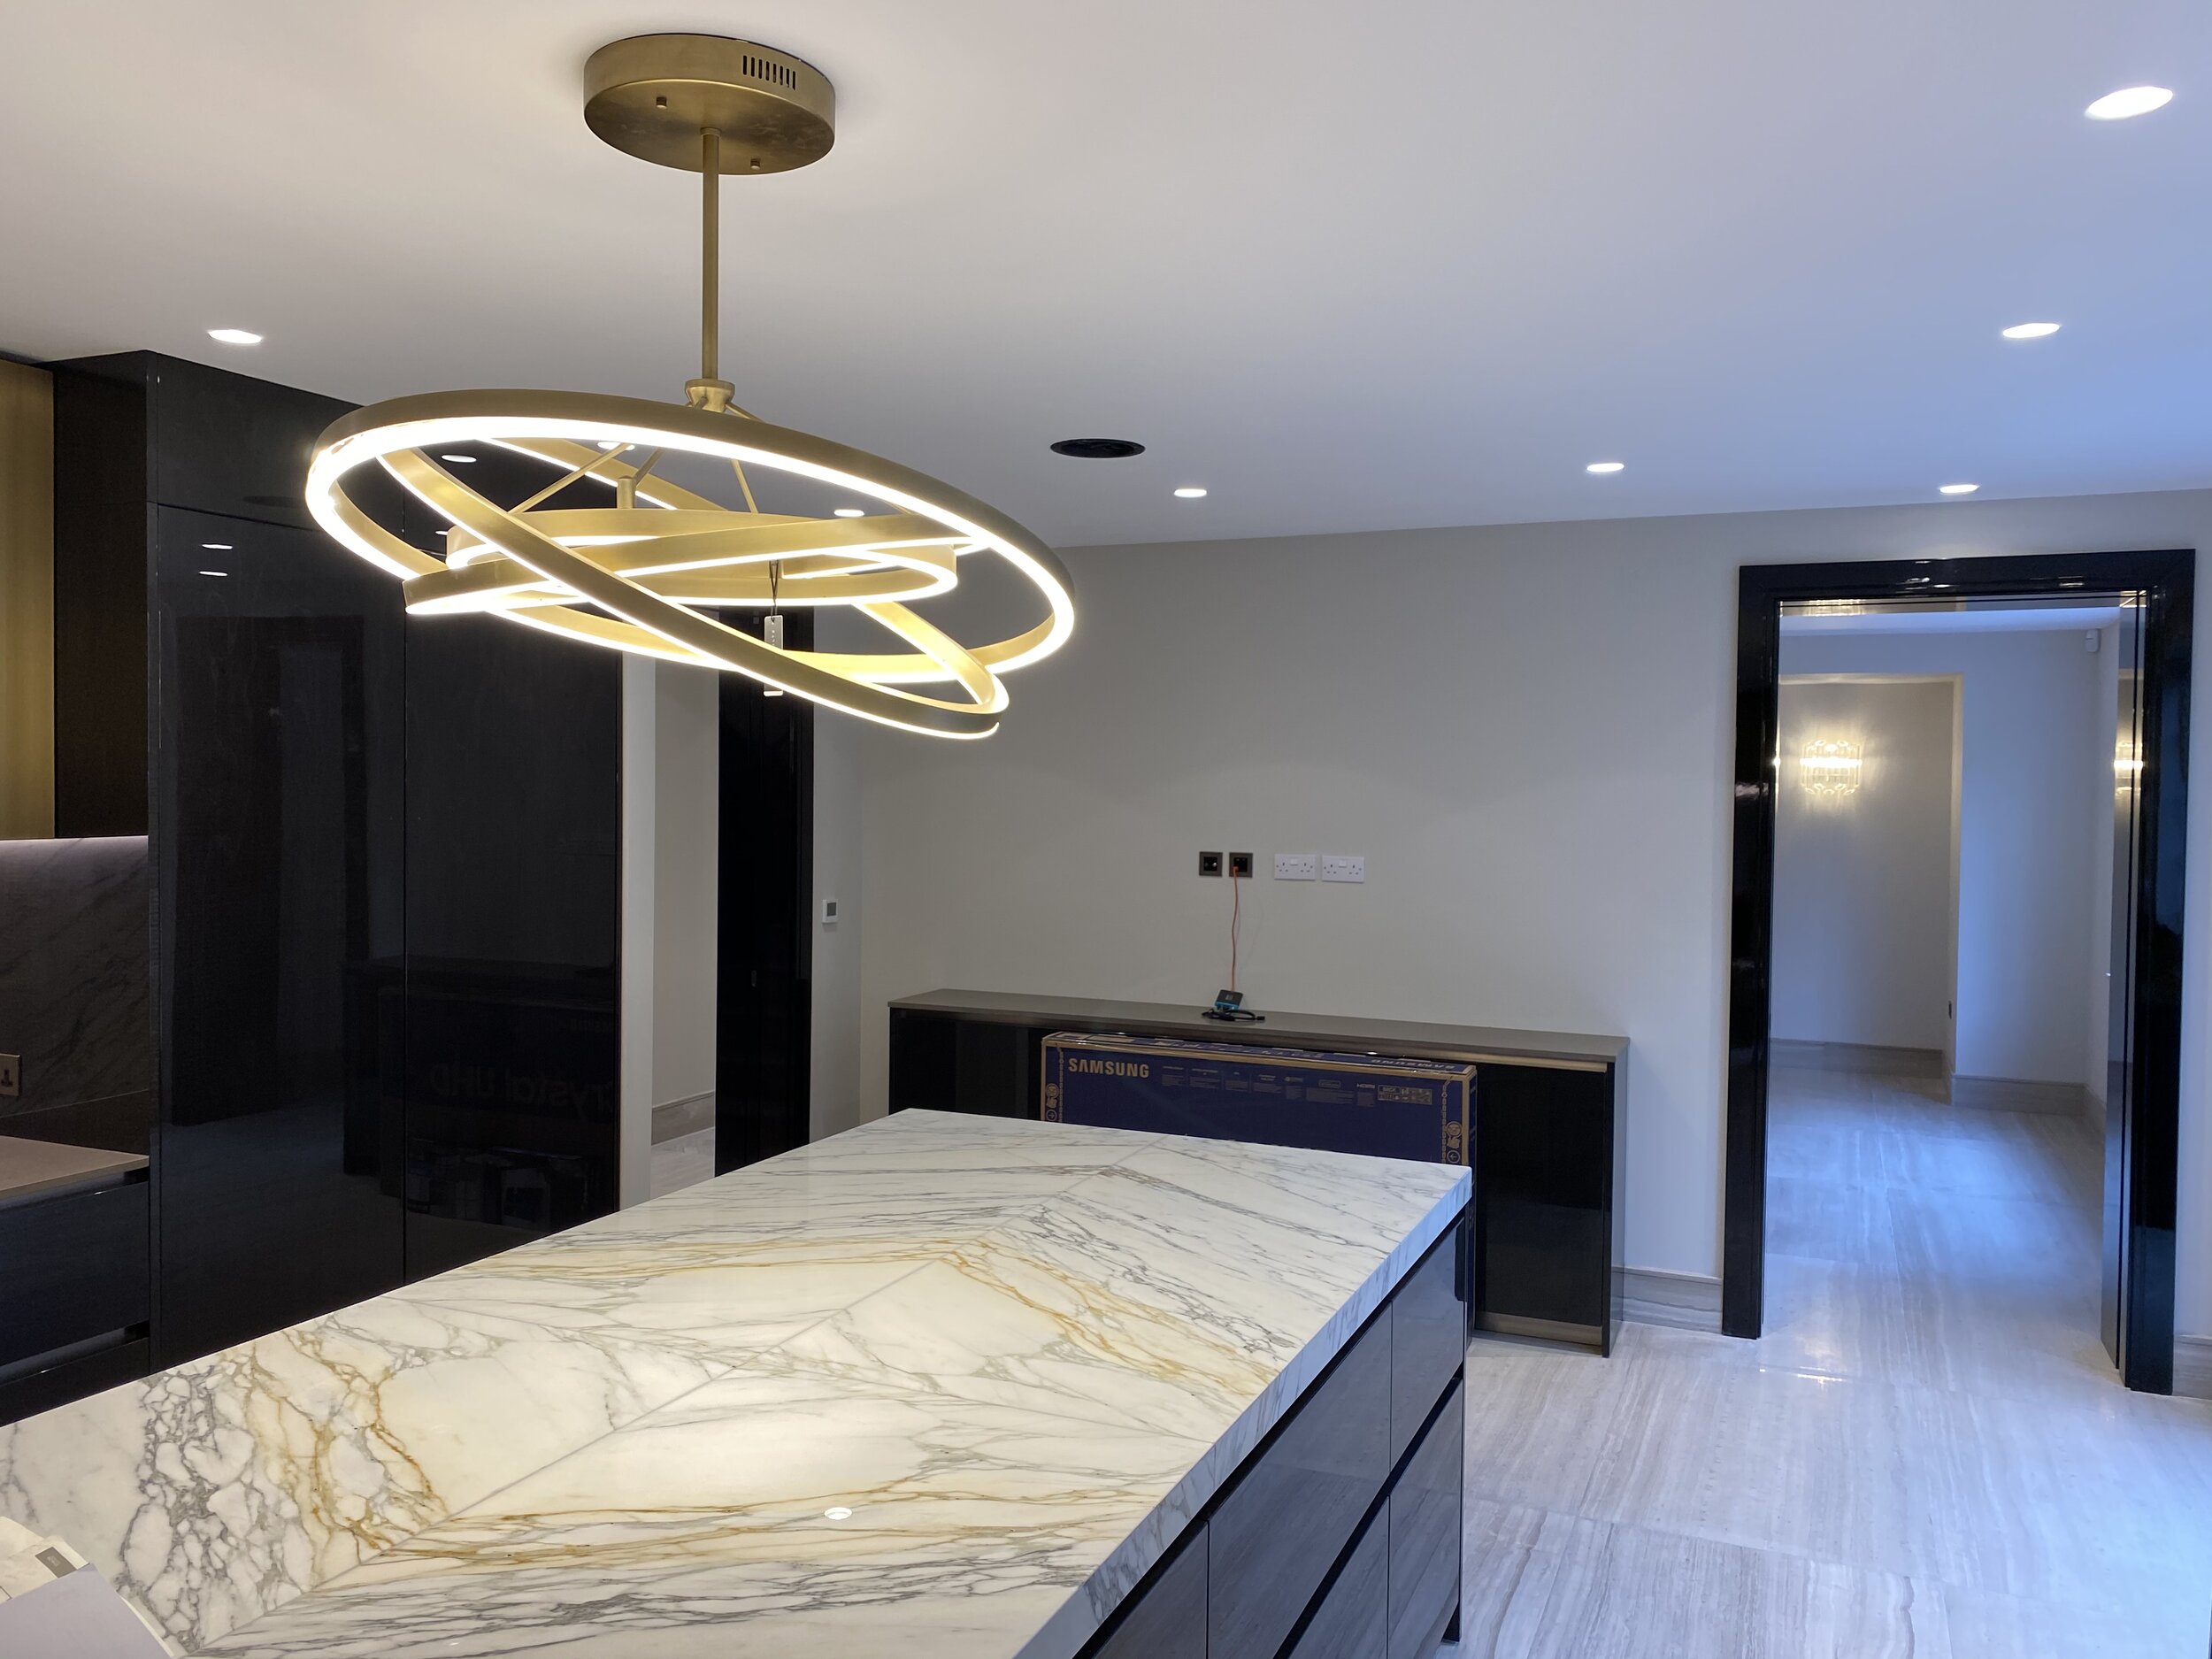 Lighting design, lighting inspiration, smart home